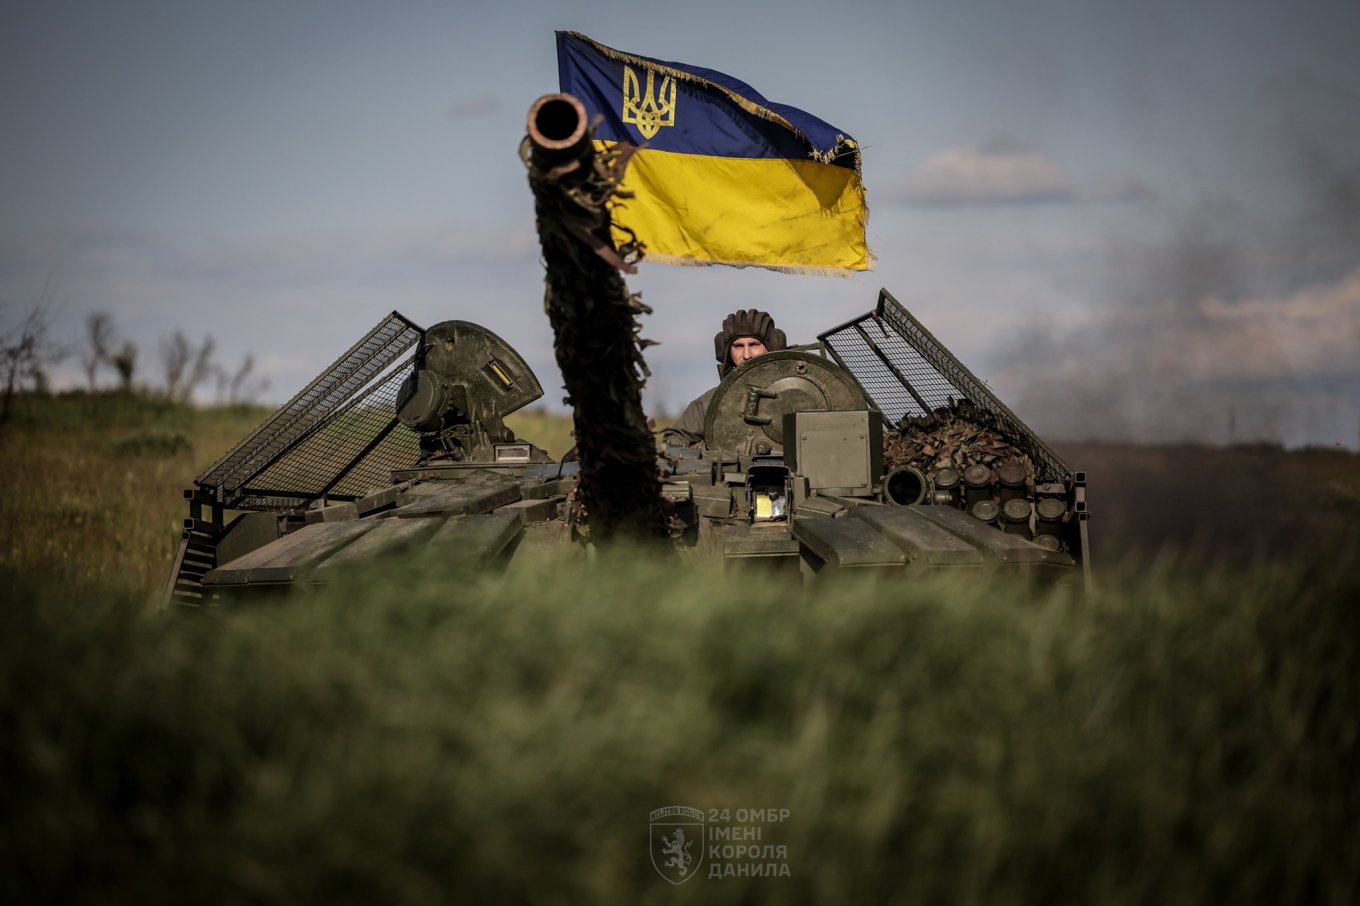 Illustrative photo Defense Express Sweden Will Contibute 75 Billion Kronor in Military Aid Over 3 Years to Ukraine